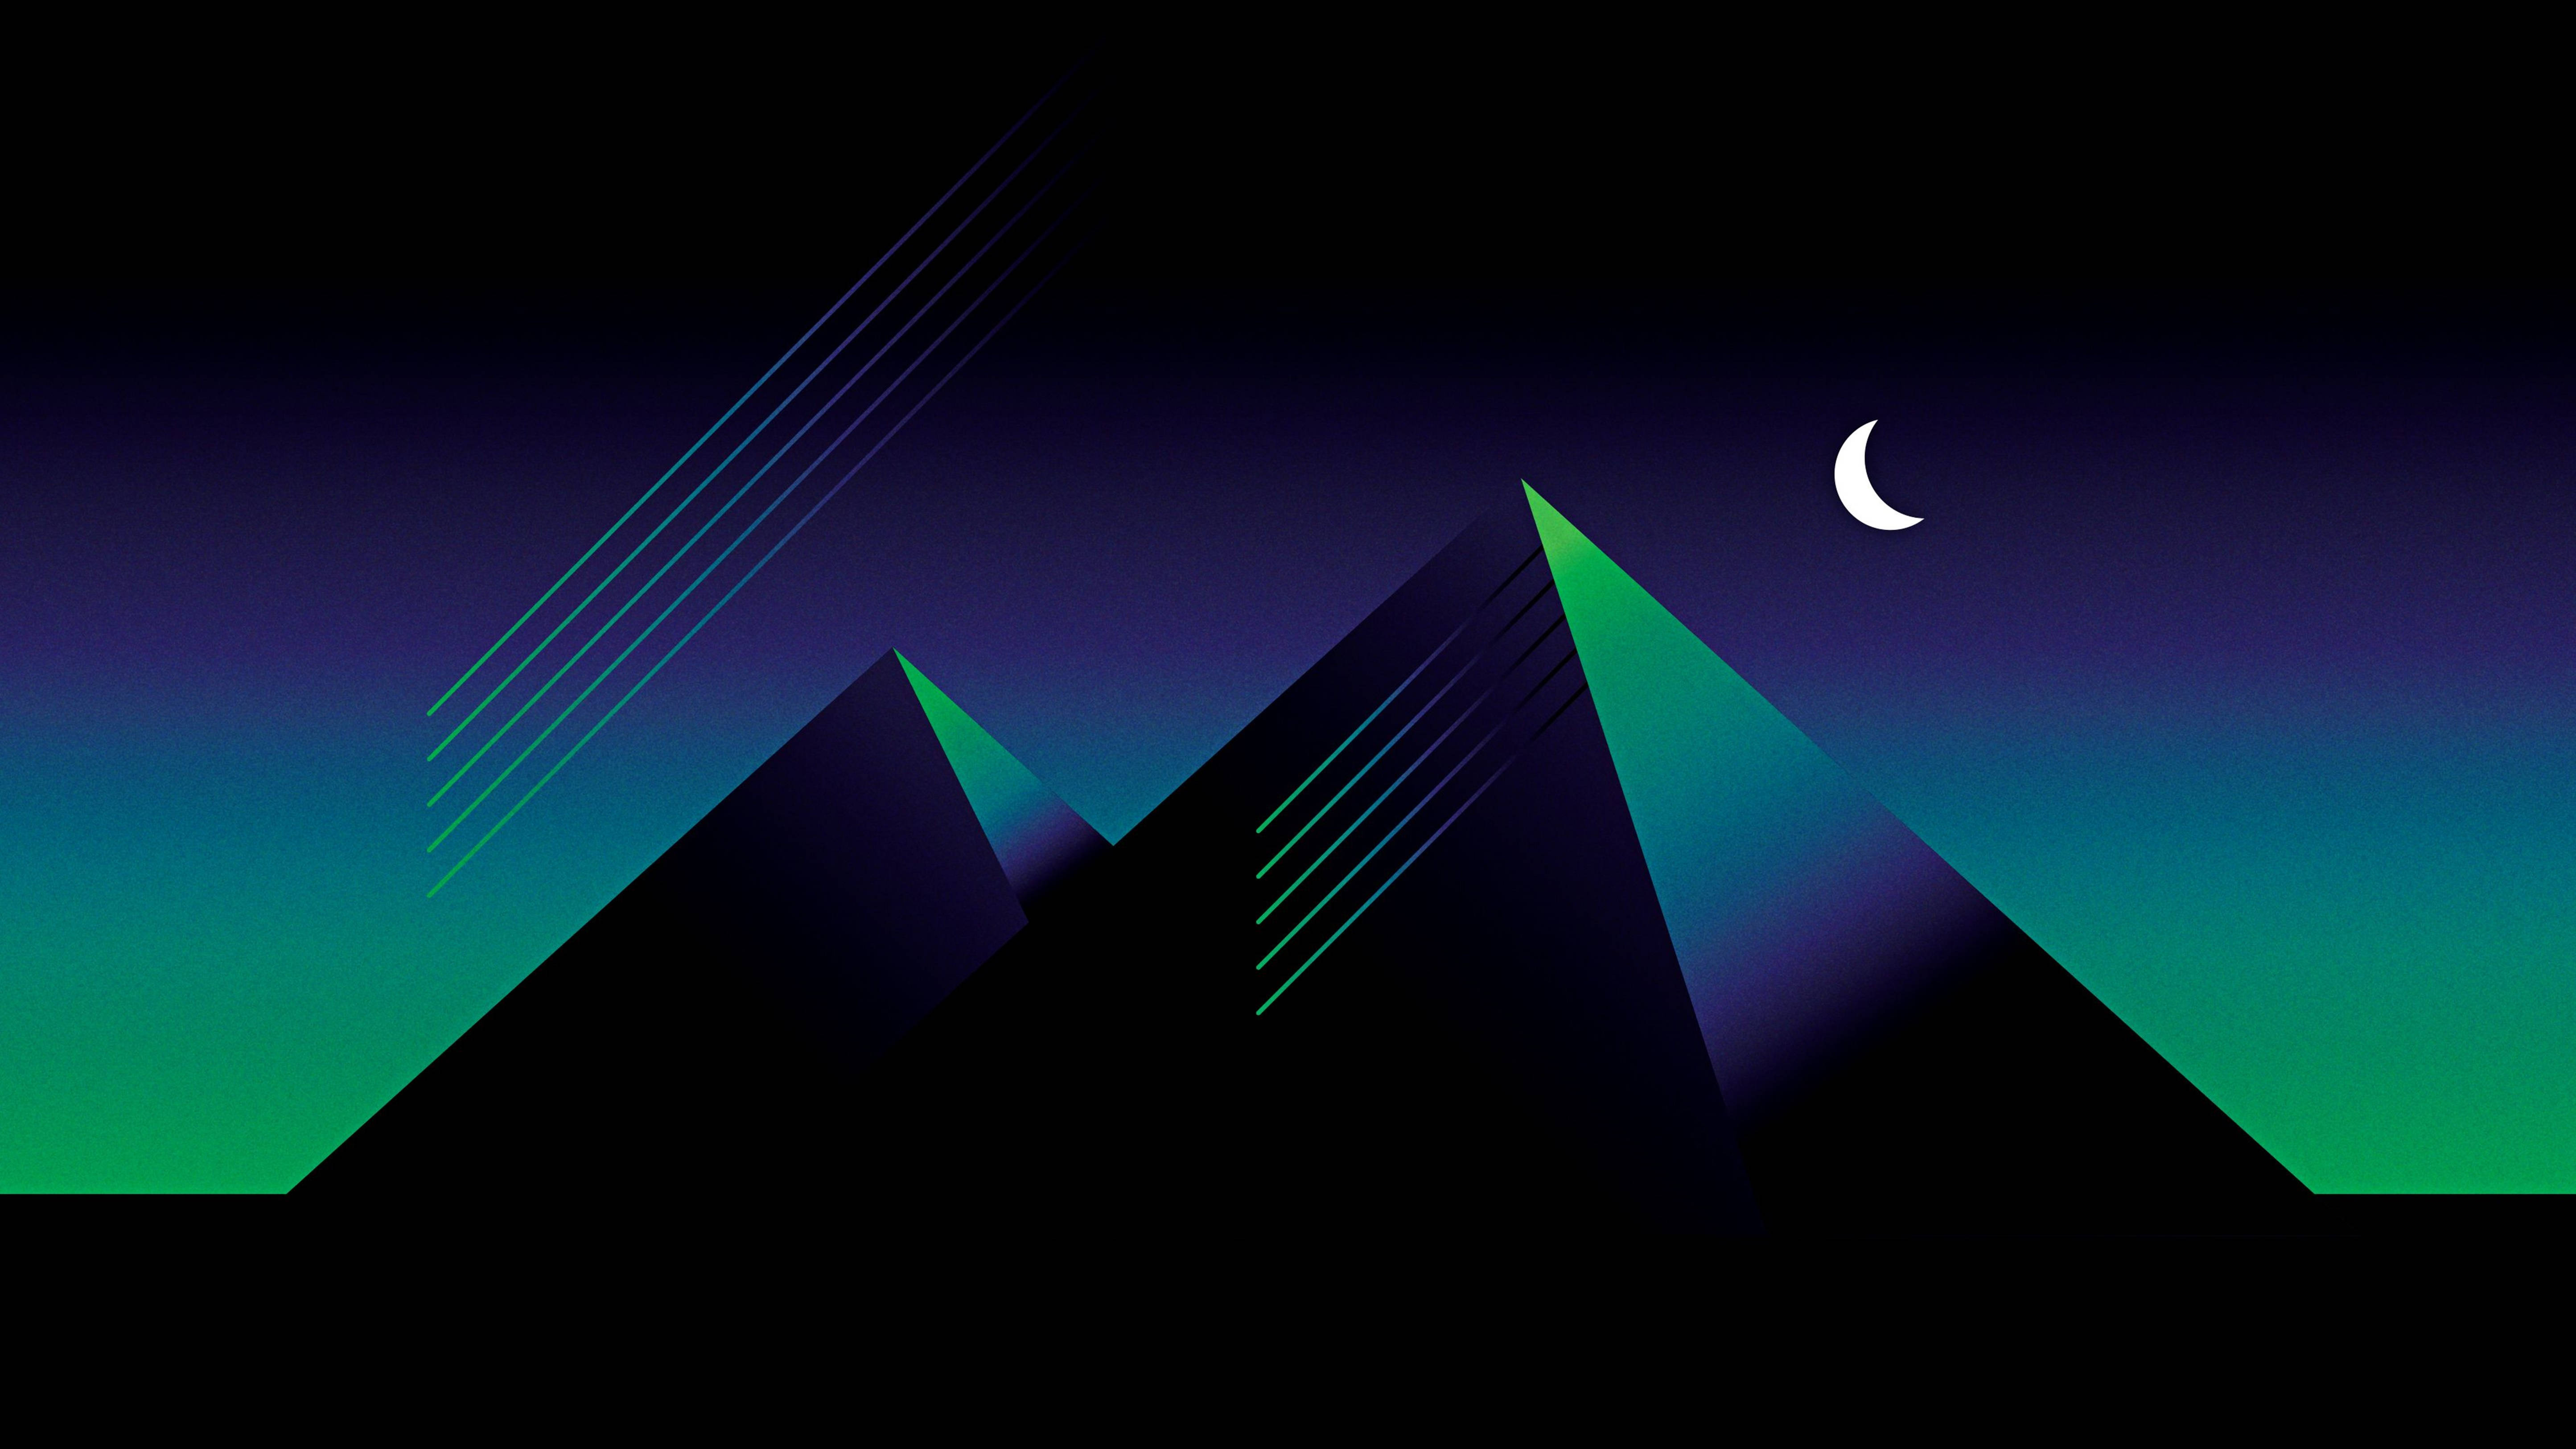 Retro Pyramid Synthwave Art 4k Background